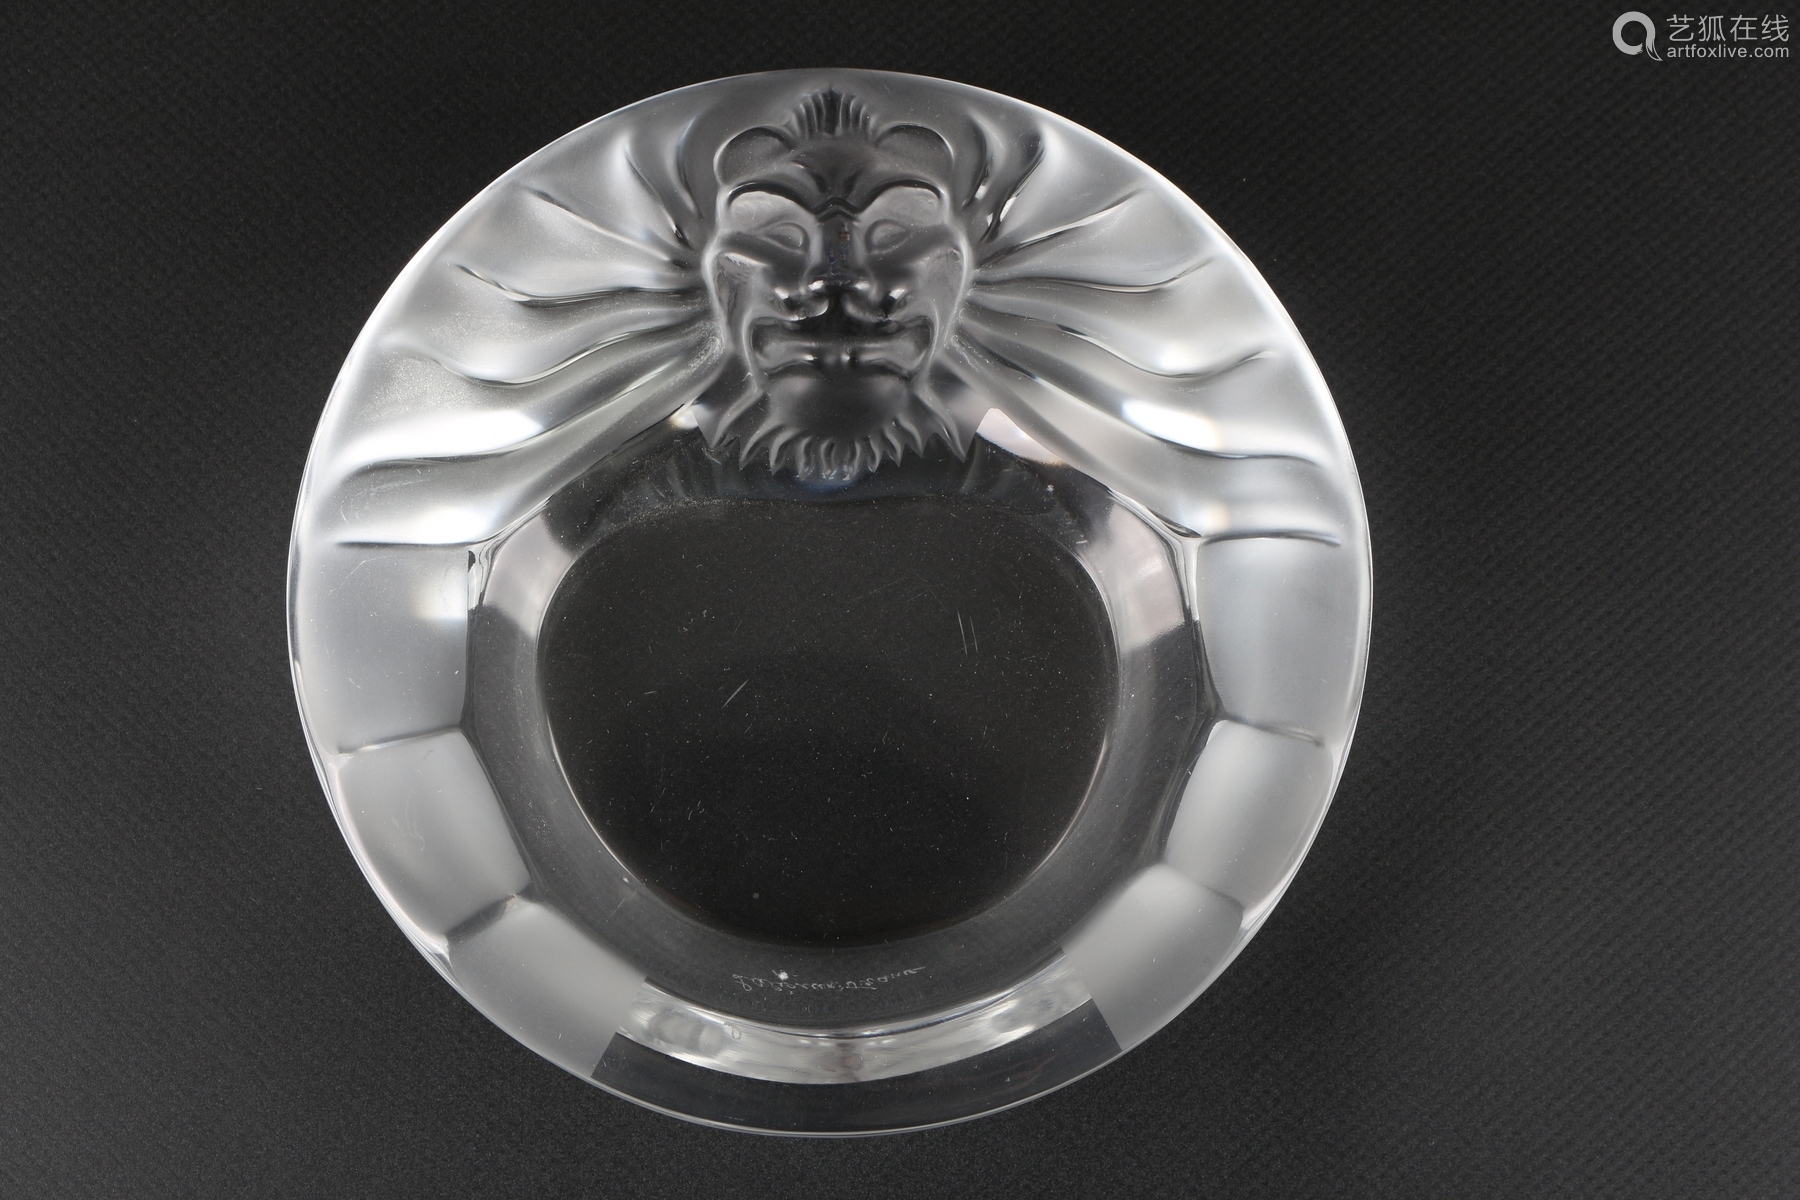 Lalique Tete De Lion Schale French Crystal Tray Deal Price Picture